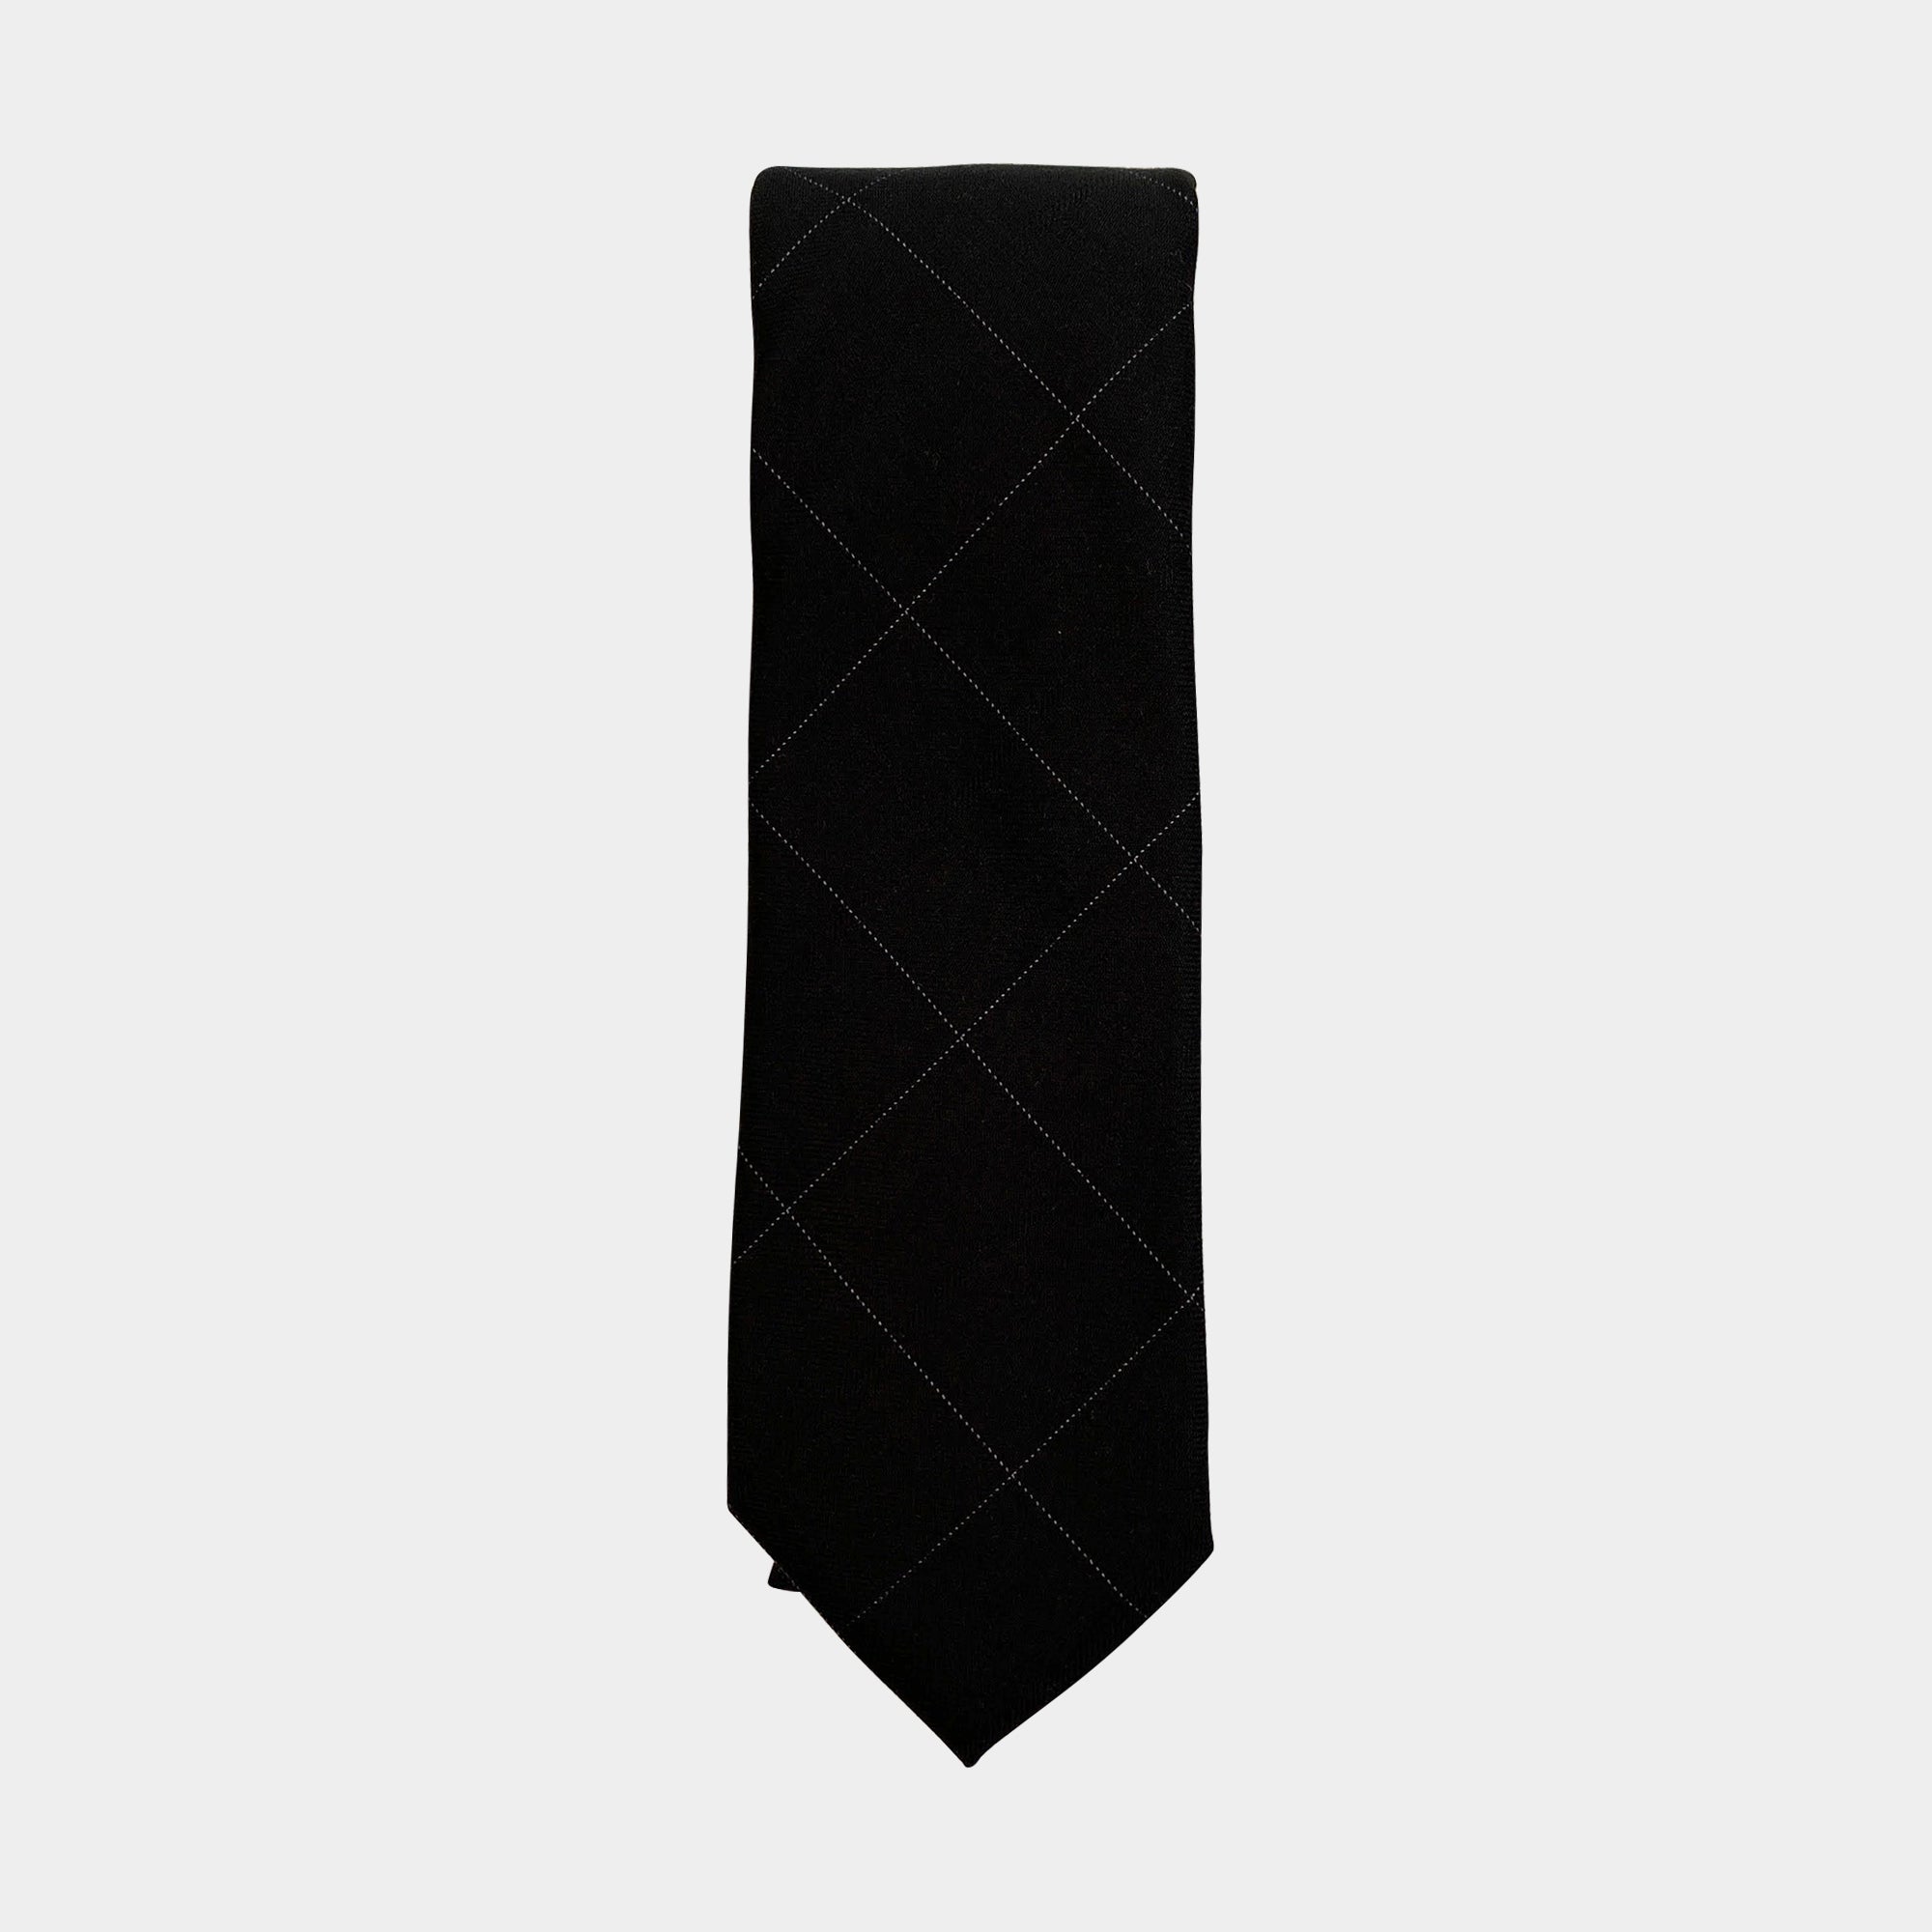 PULLEY 2.0 - Men's Tie